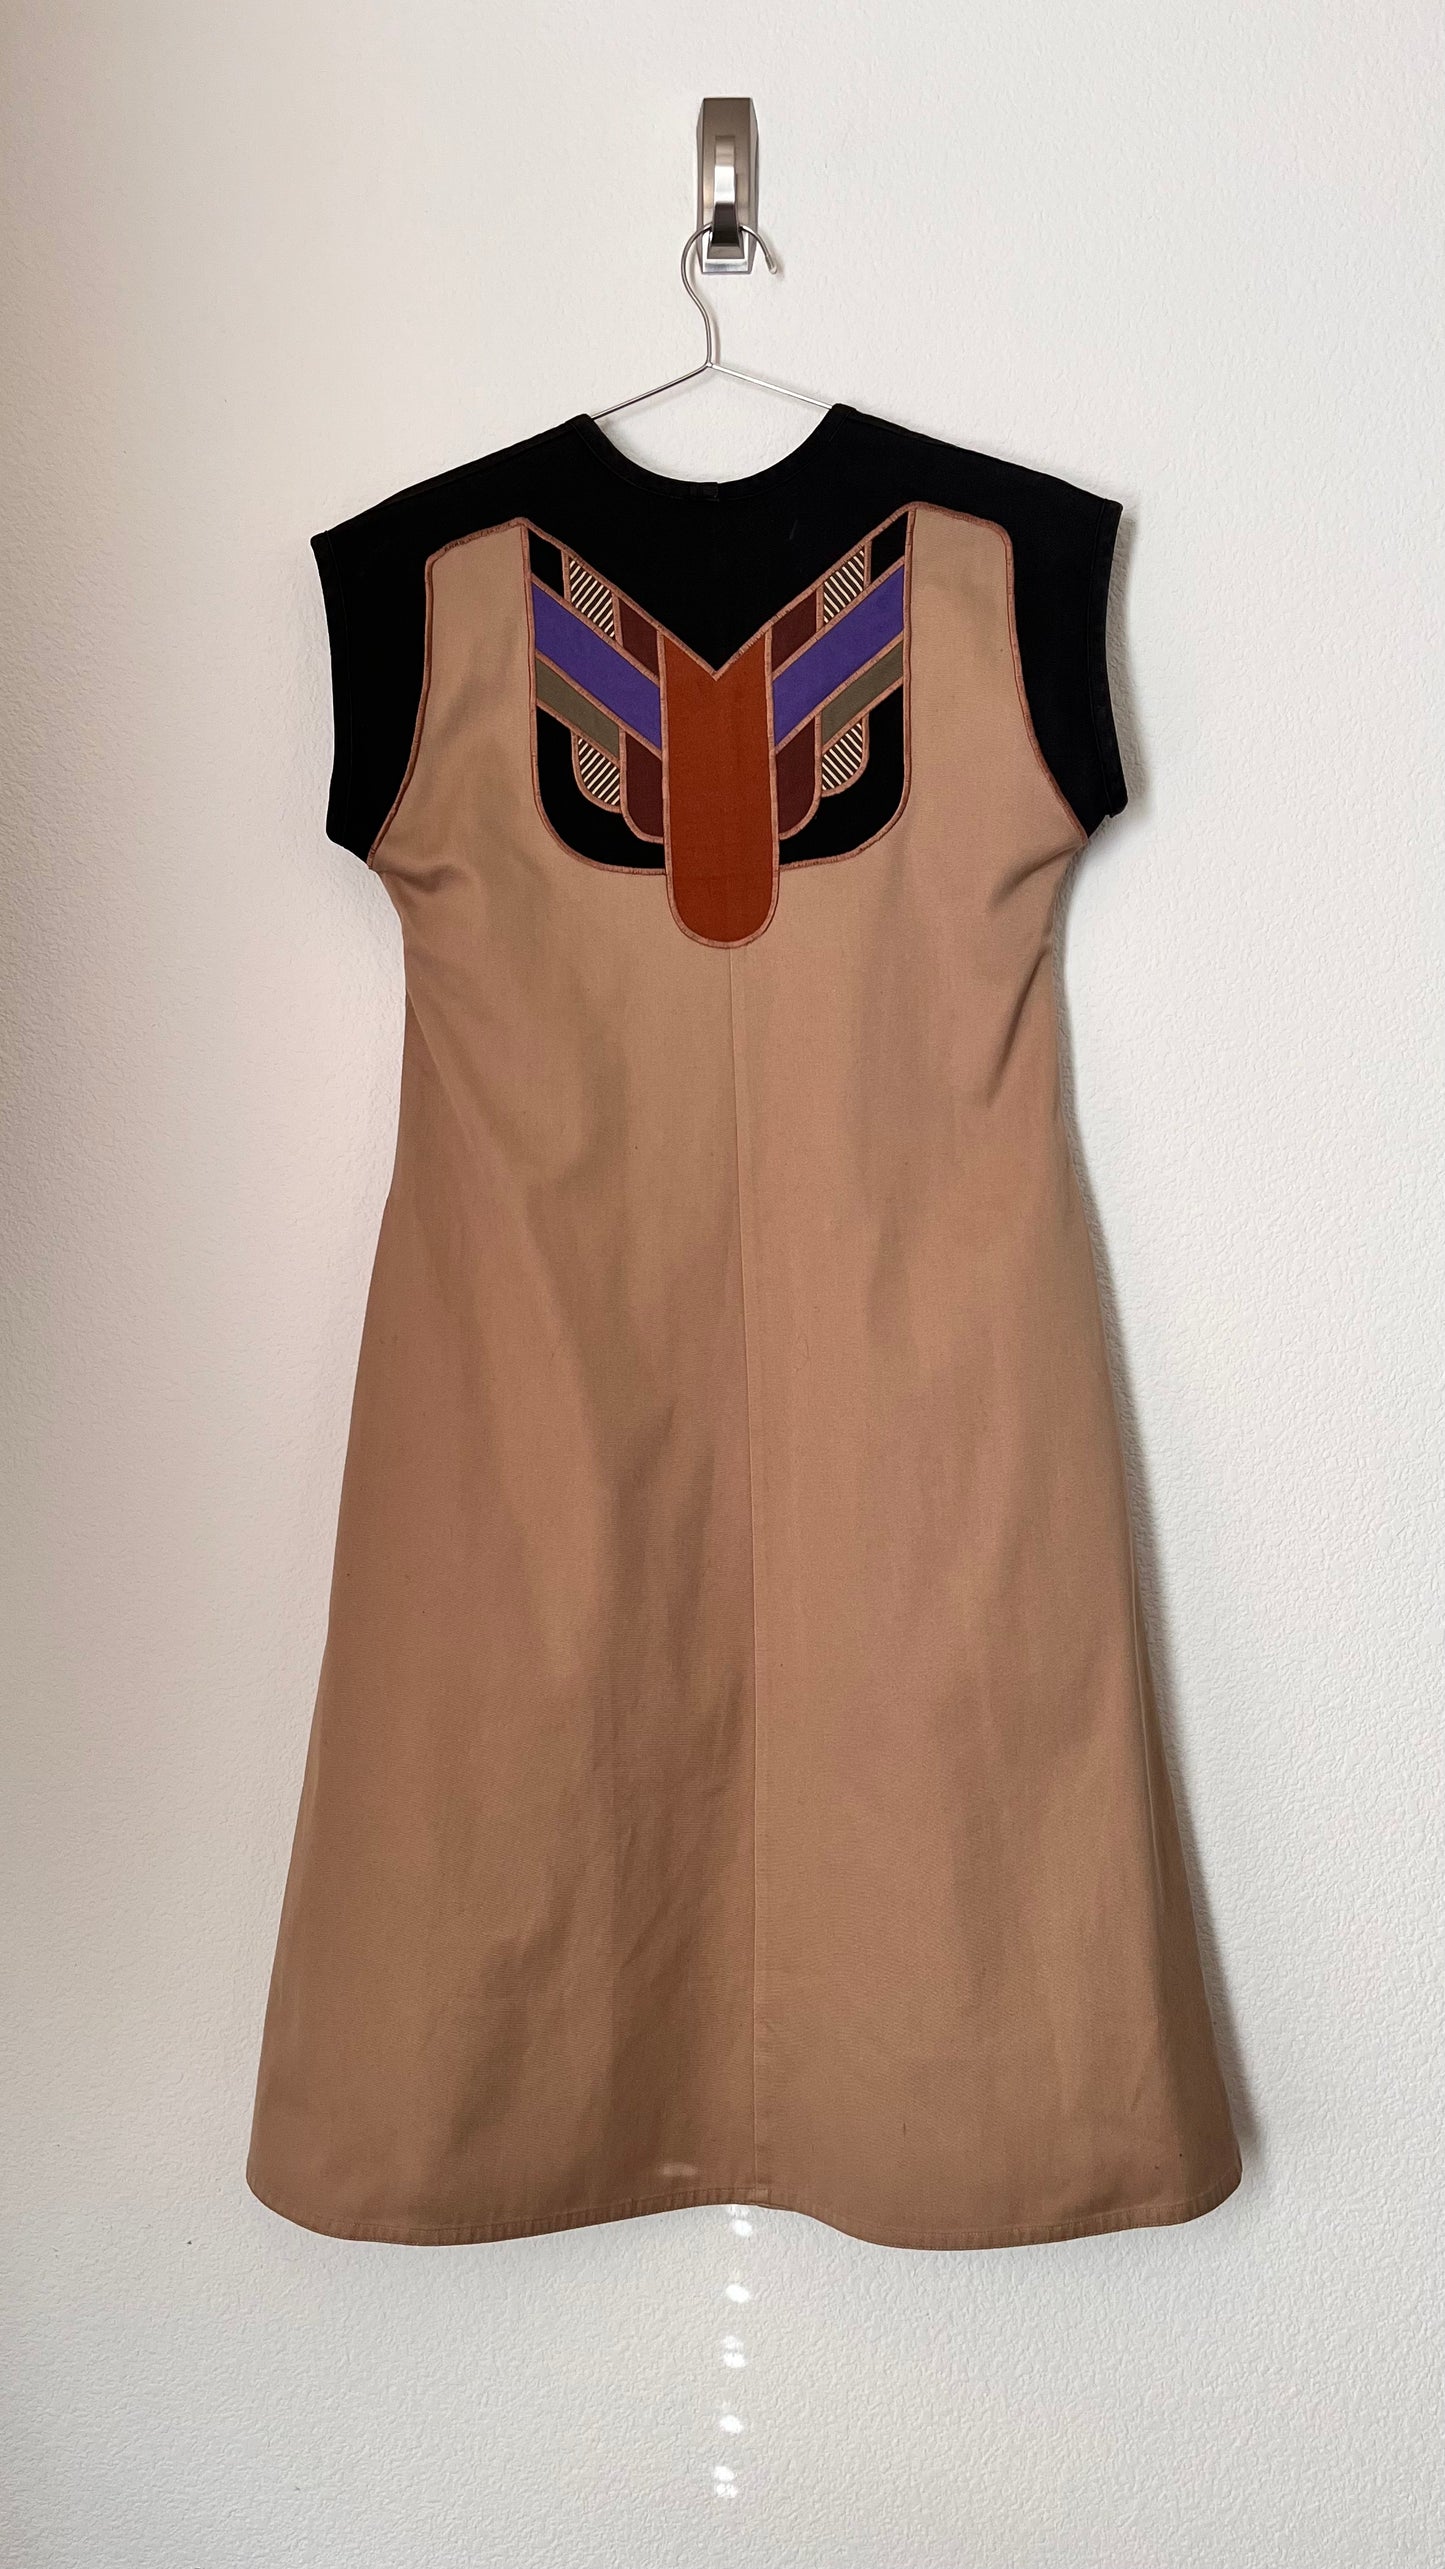 G. Girvin 1970s vintage patch smock dress